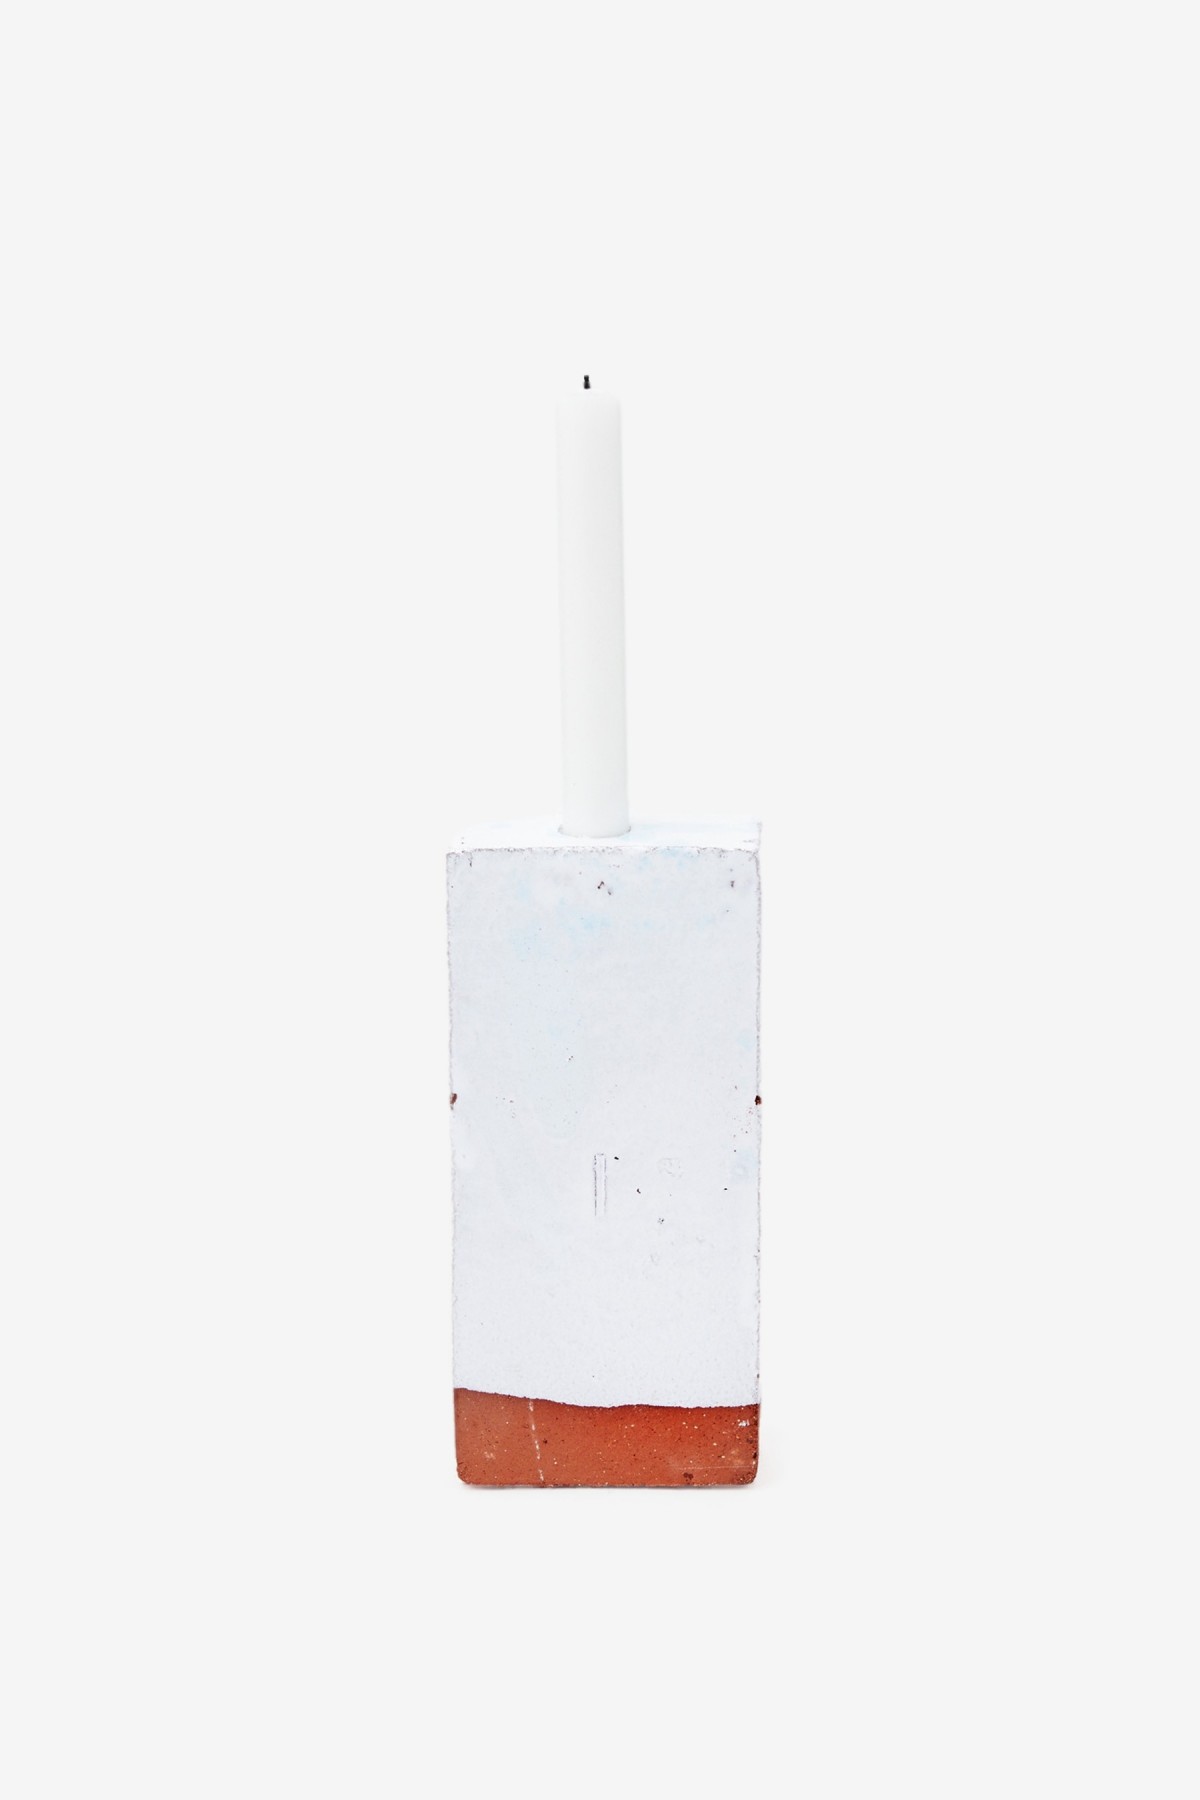 Niko June A Single Brick Candle in White